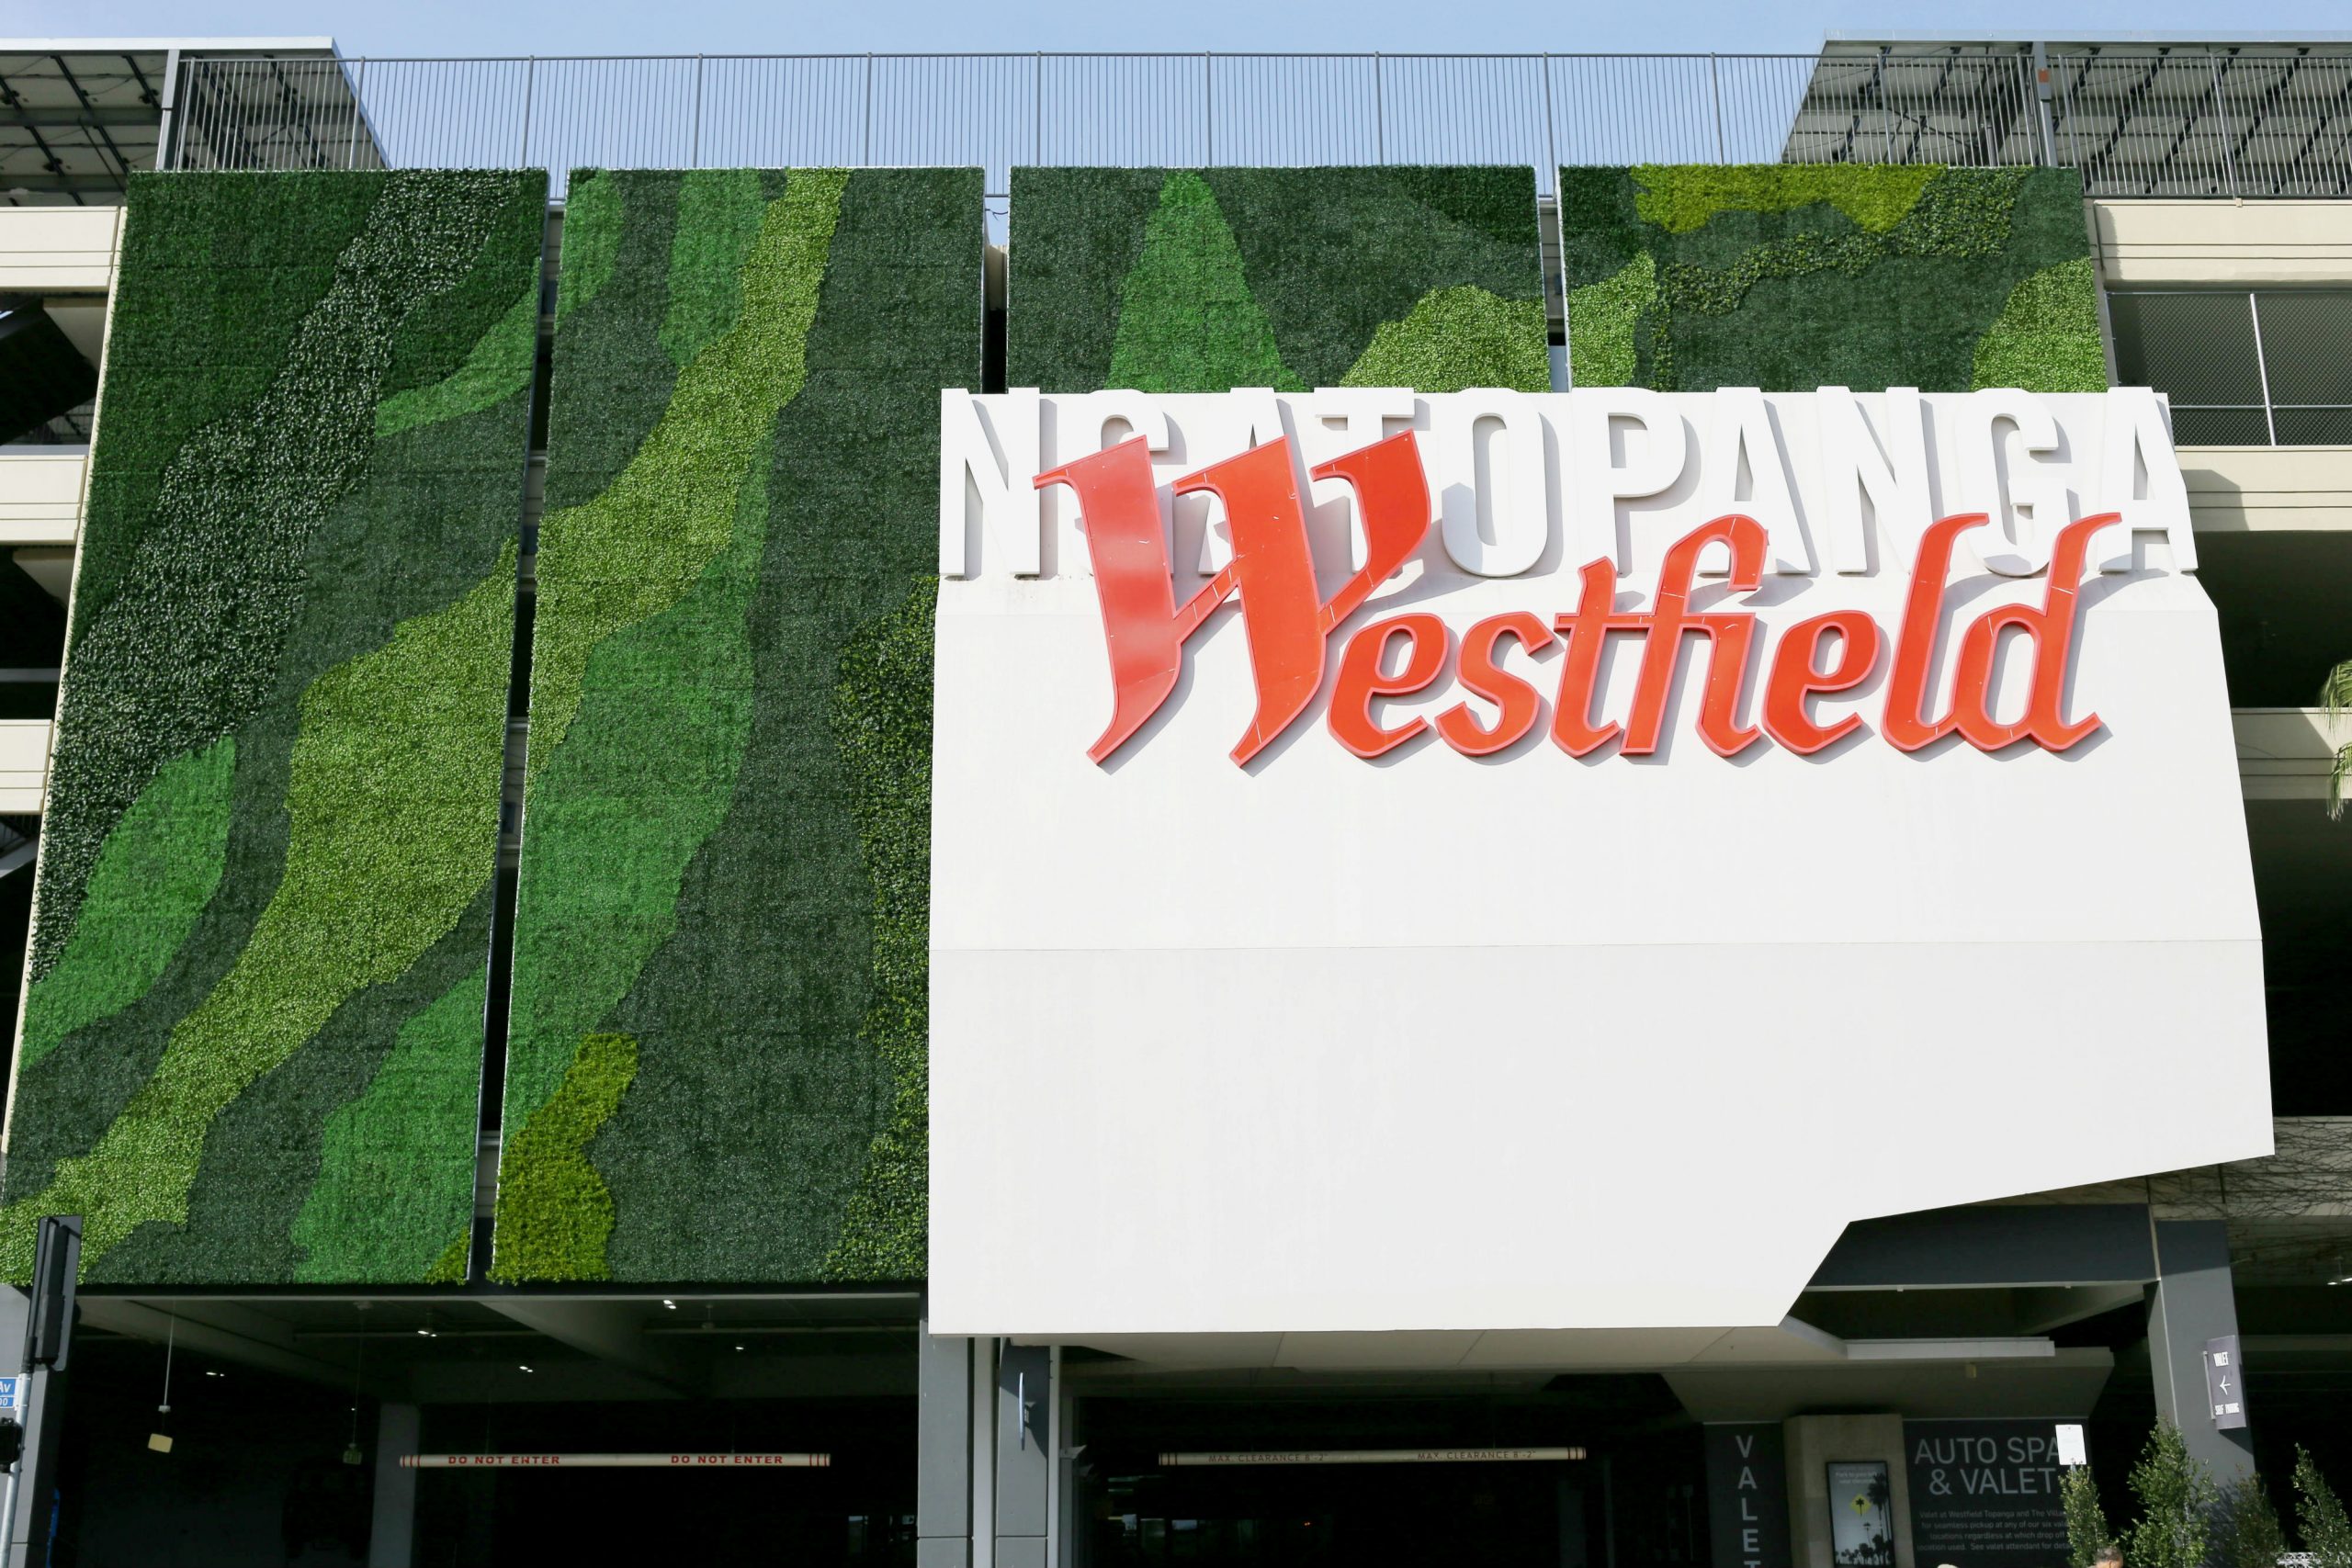 Westfield Topanga Center - AO  Architecture. Design. Relationships.